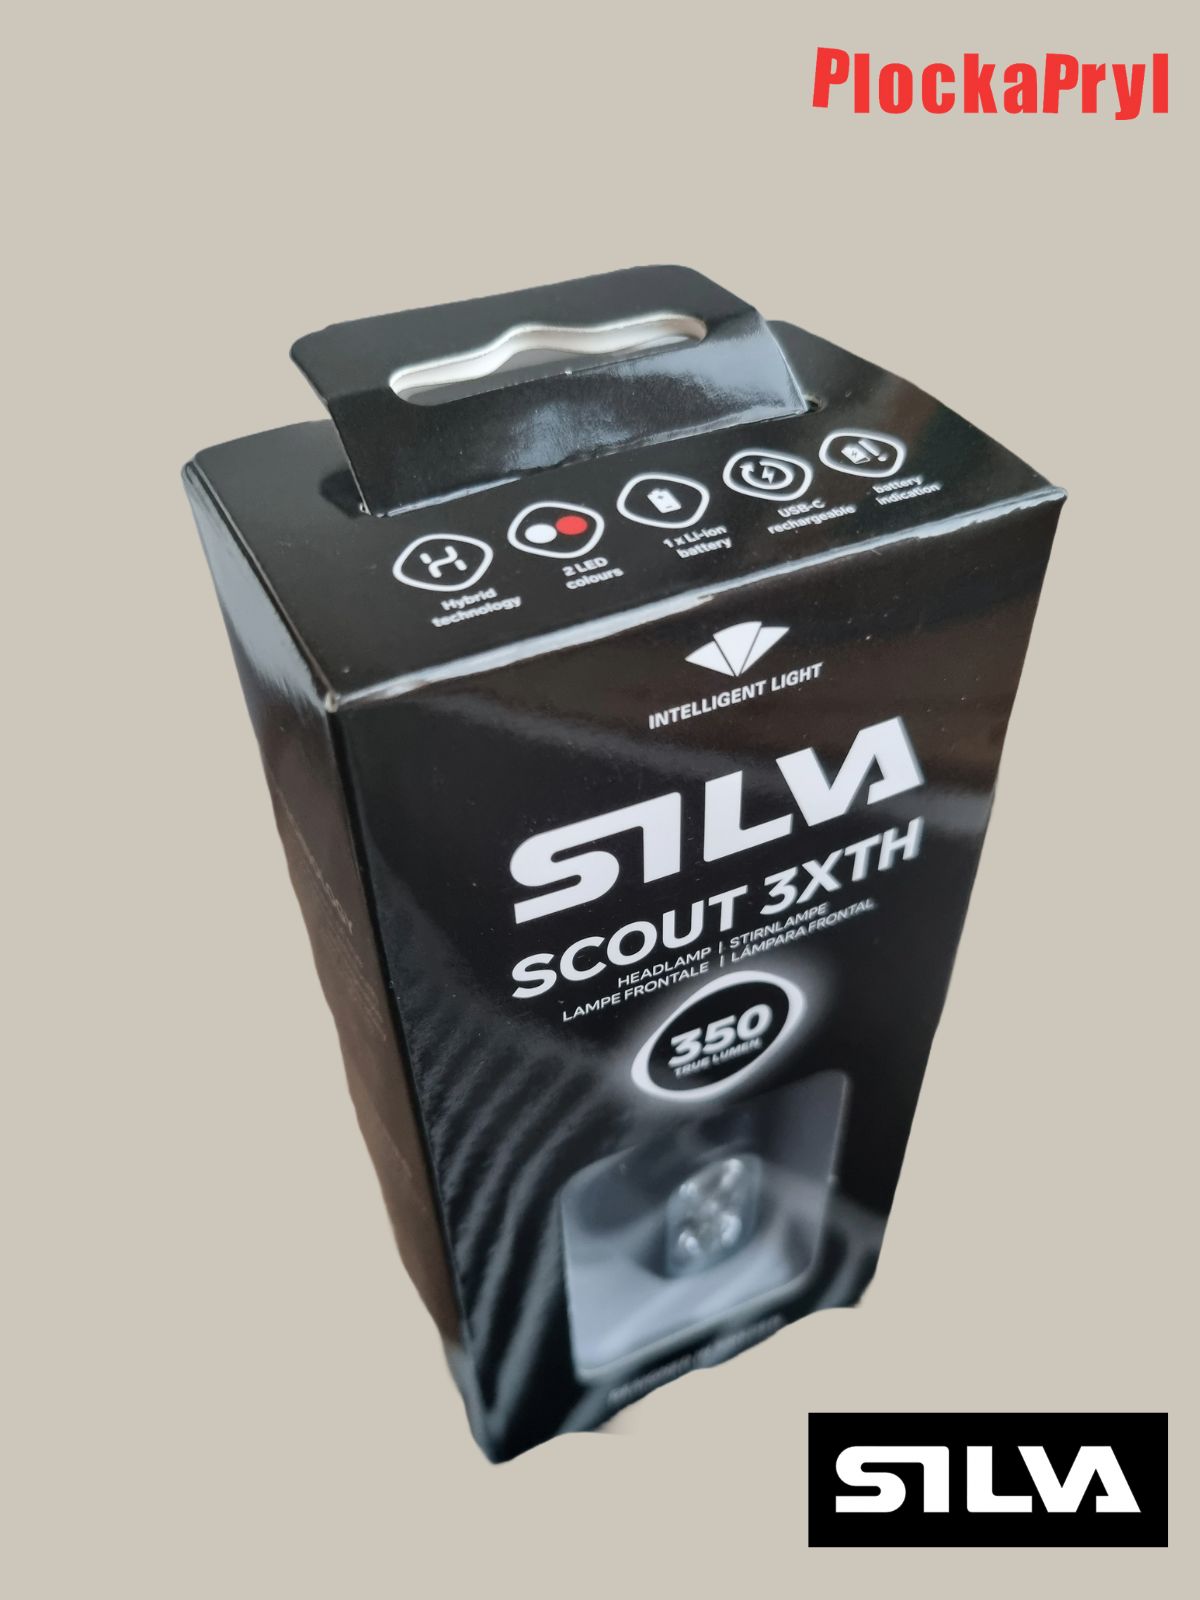 Silva Scout 3XTH - Pannlampa, svart, 350lm